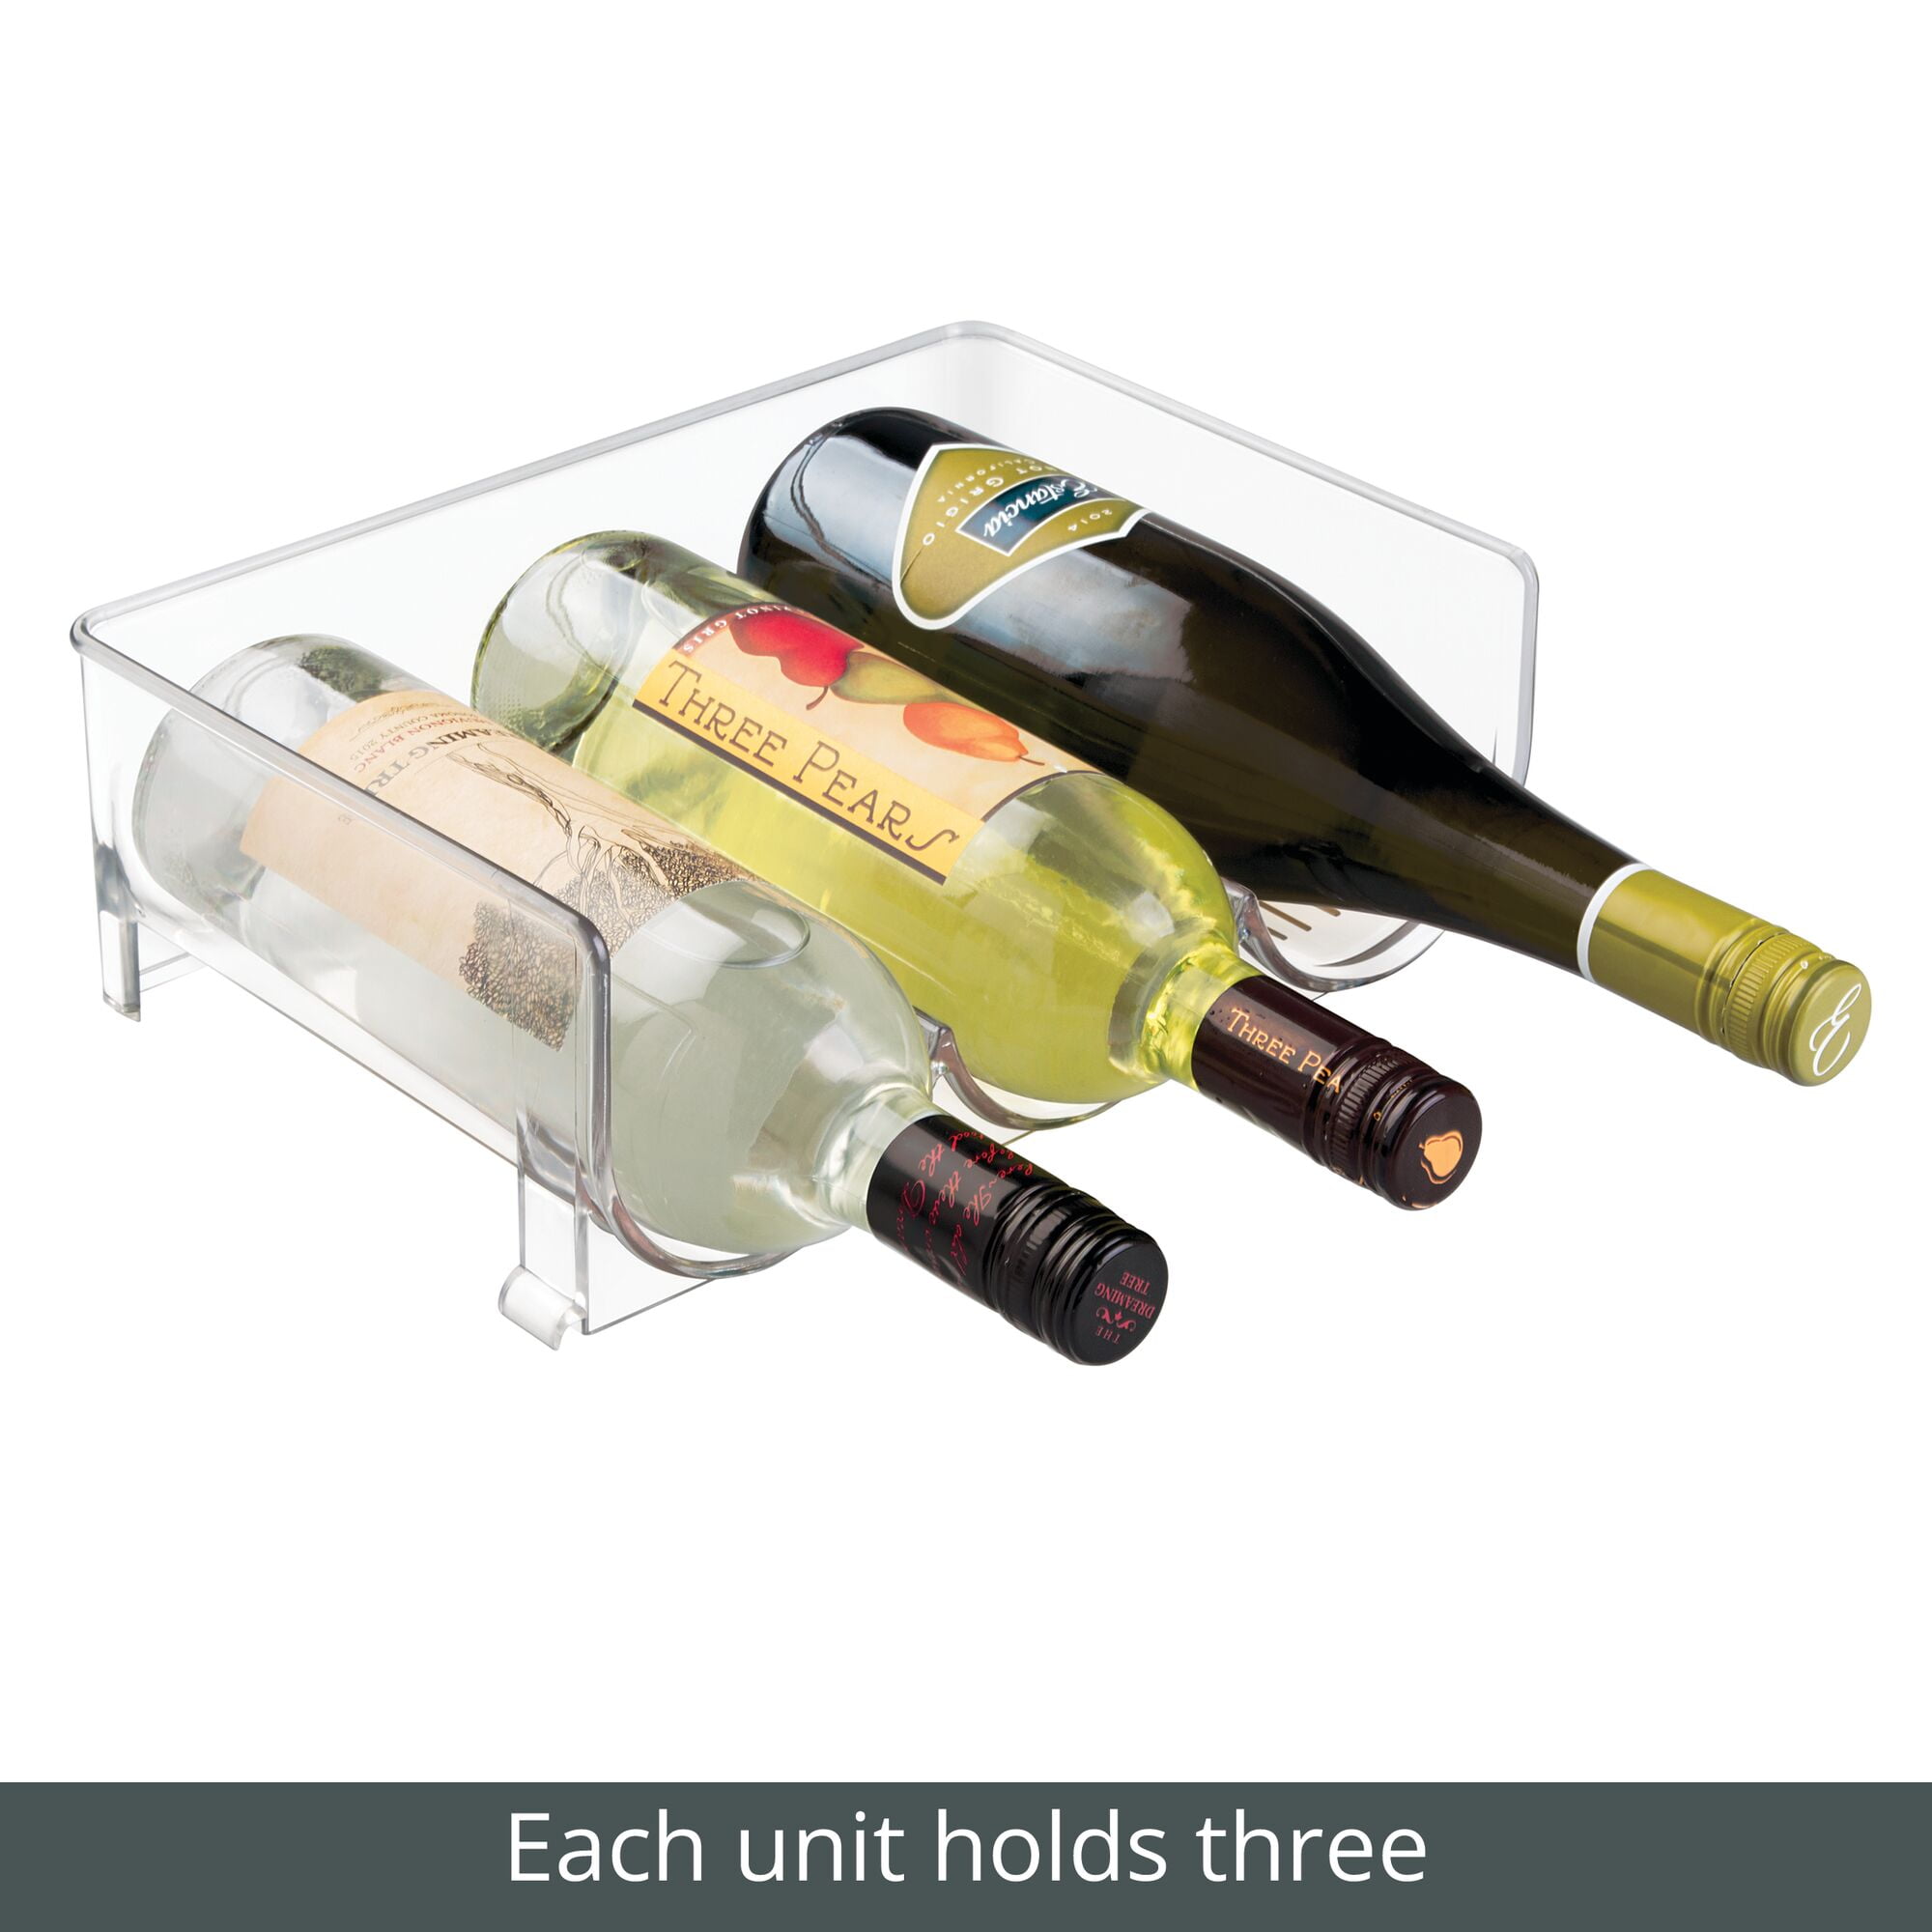  mDesign Stackable Plastic 3 Bottle Refrigerator Wine Rack -  Kitchen Storage Organizer for Champagne, Wine or Water Bottles - Stacking  Wine Organizer for Fridge - Ligne Collection - 2 Pack - Clear : Home &  Kitchen